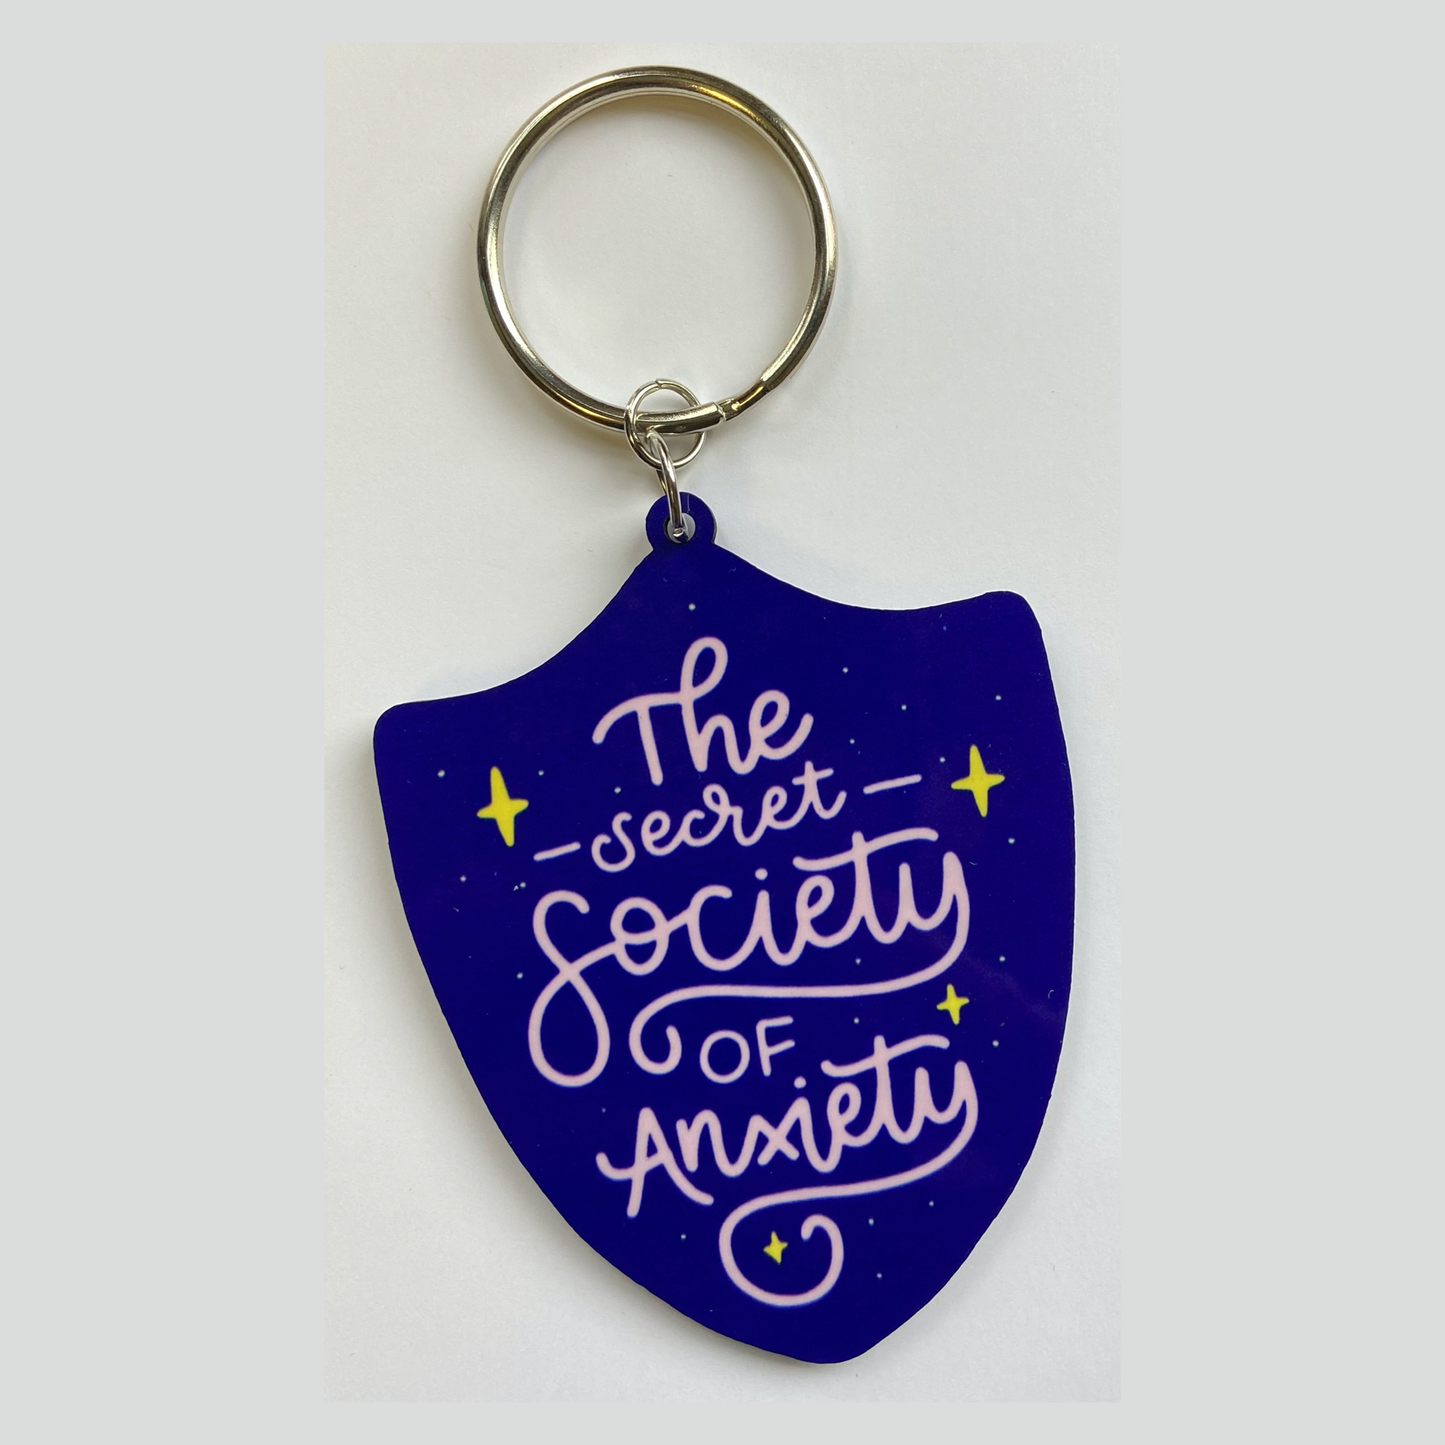 The Secret Society of Anxiety Keychain